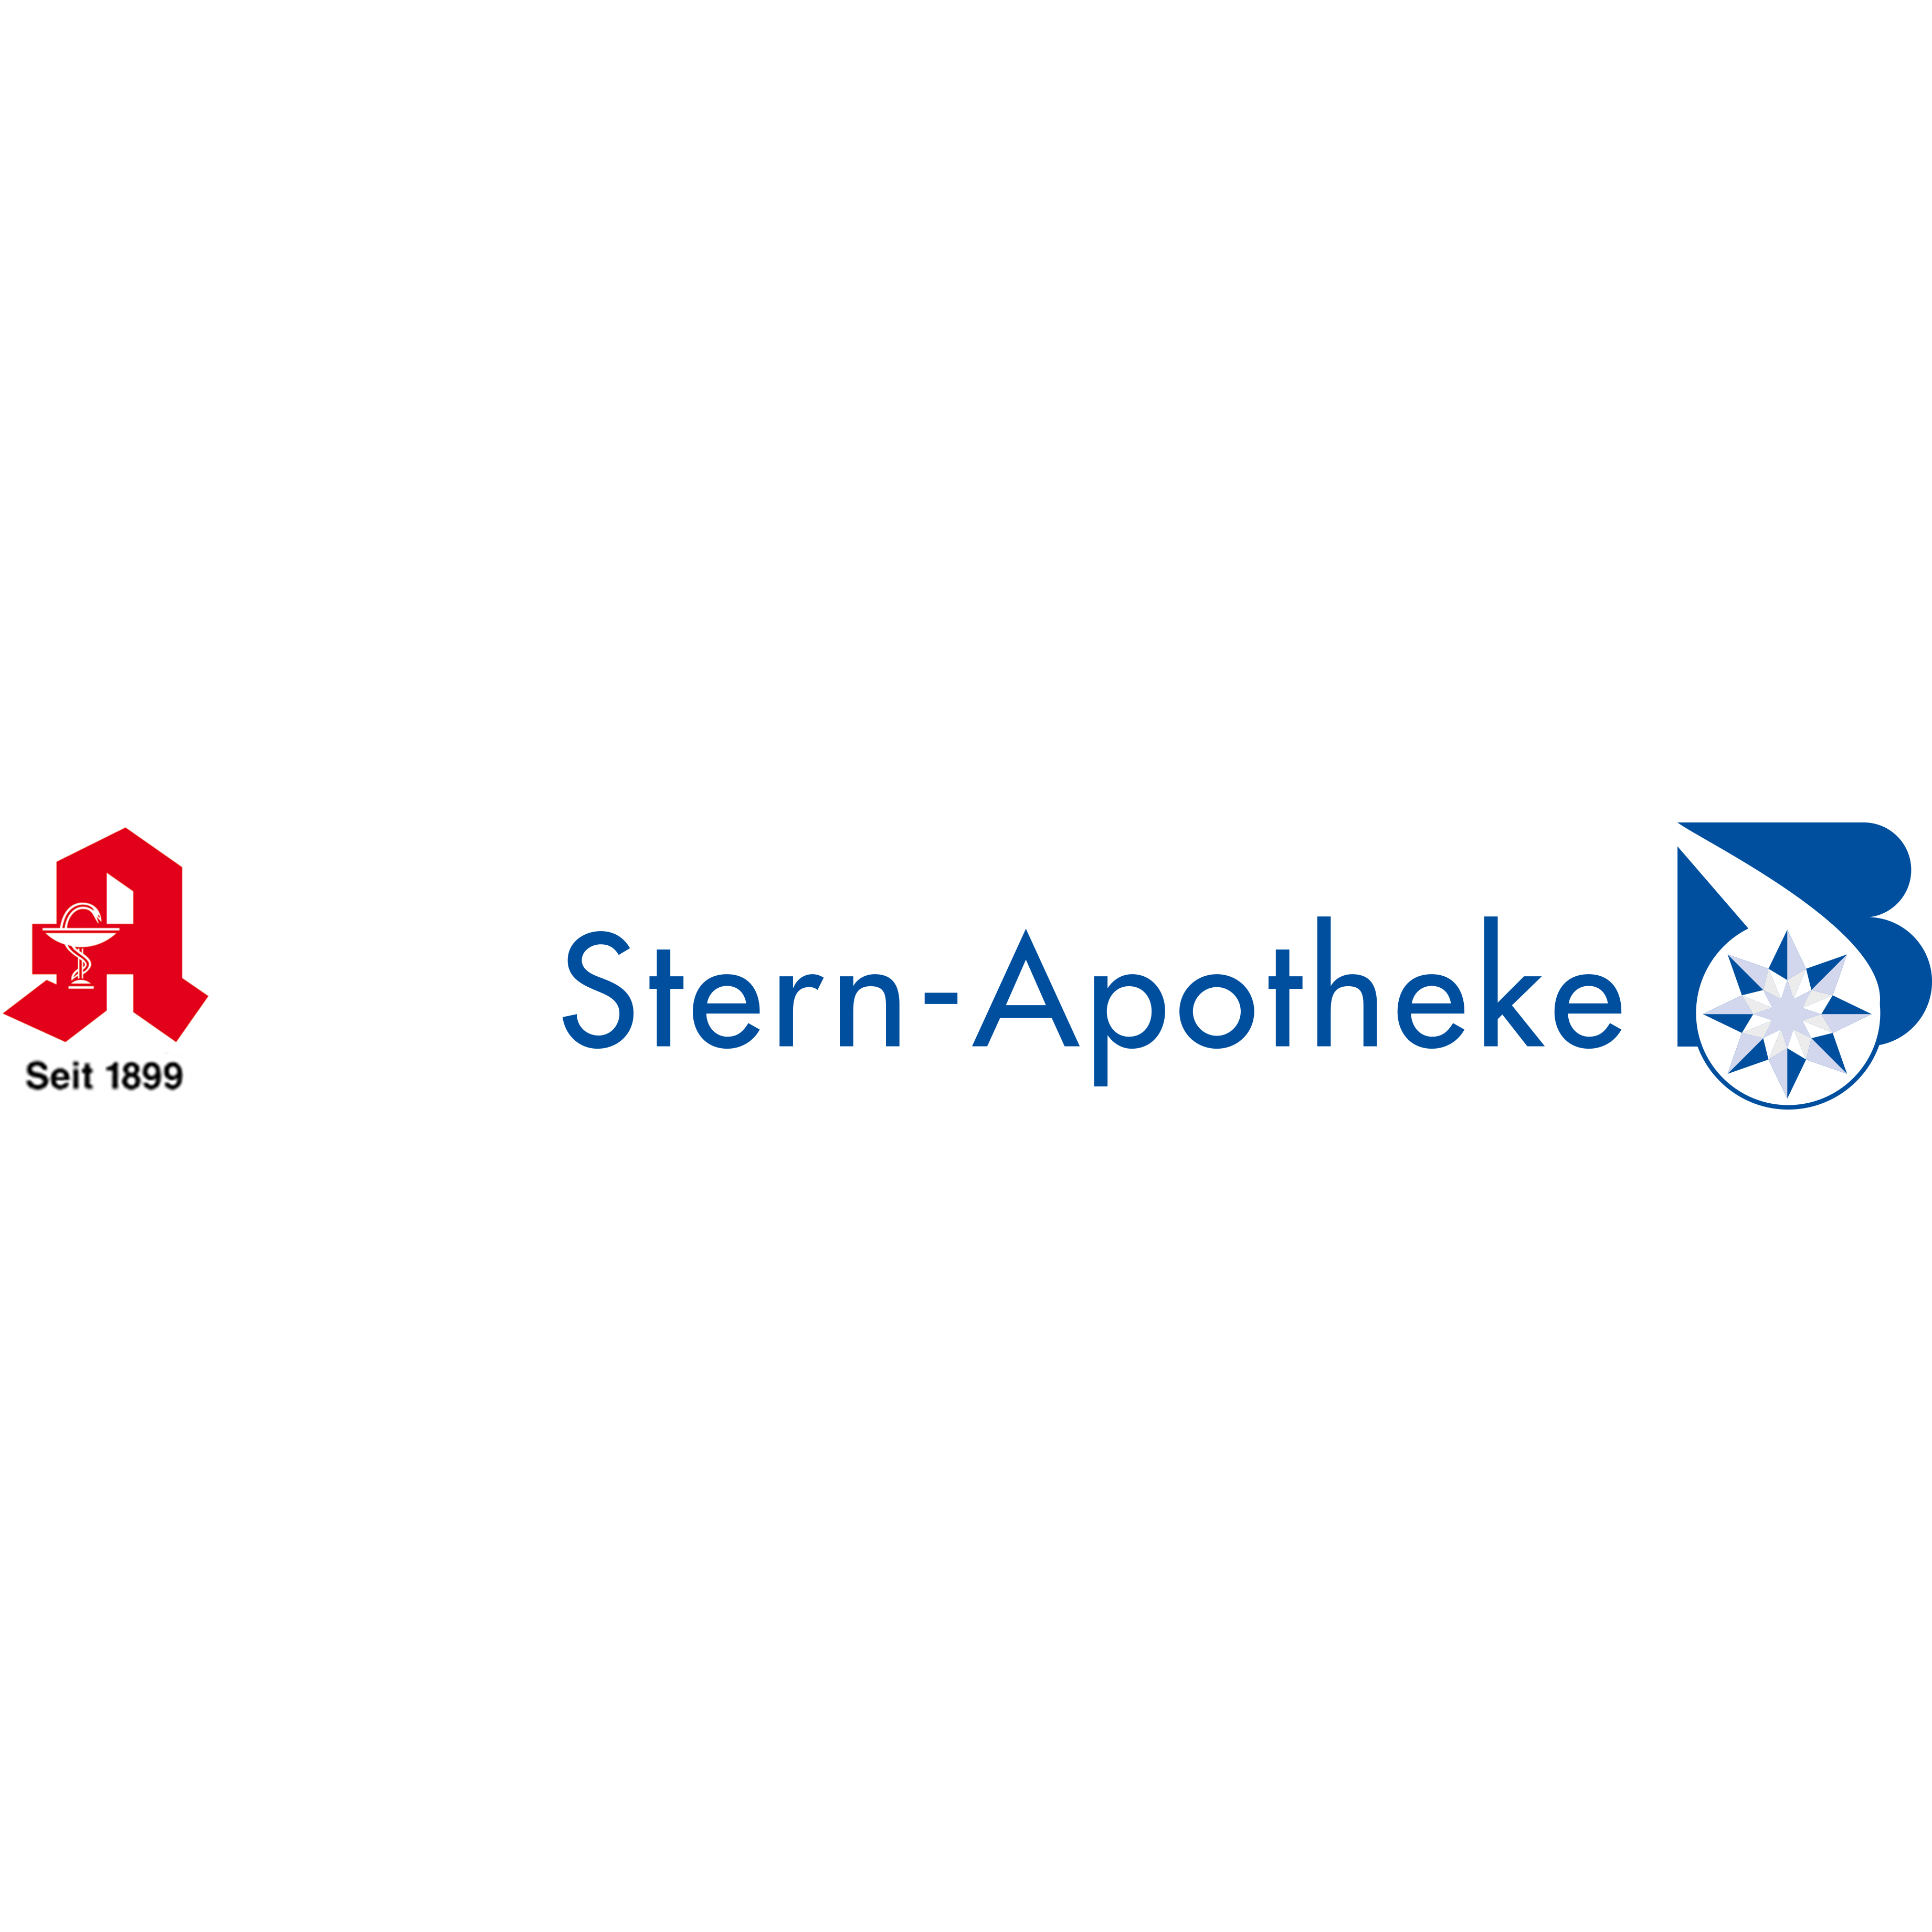 Stern-Apotheke in Hürth im Rheinland - Logo